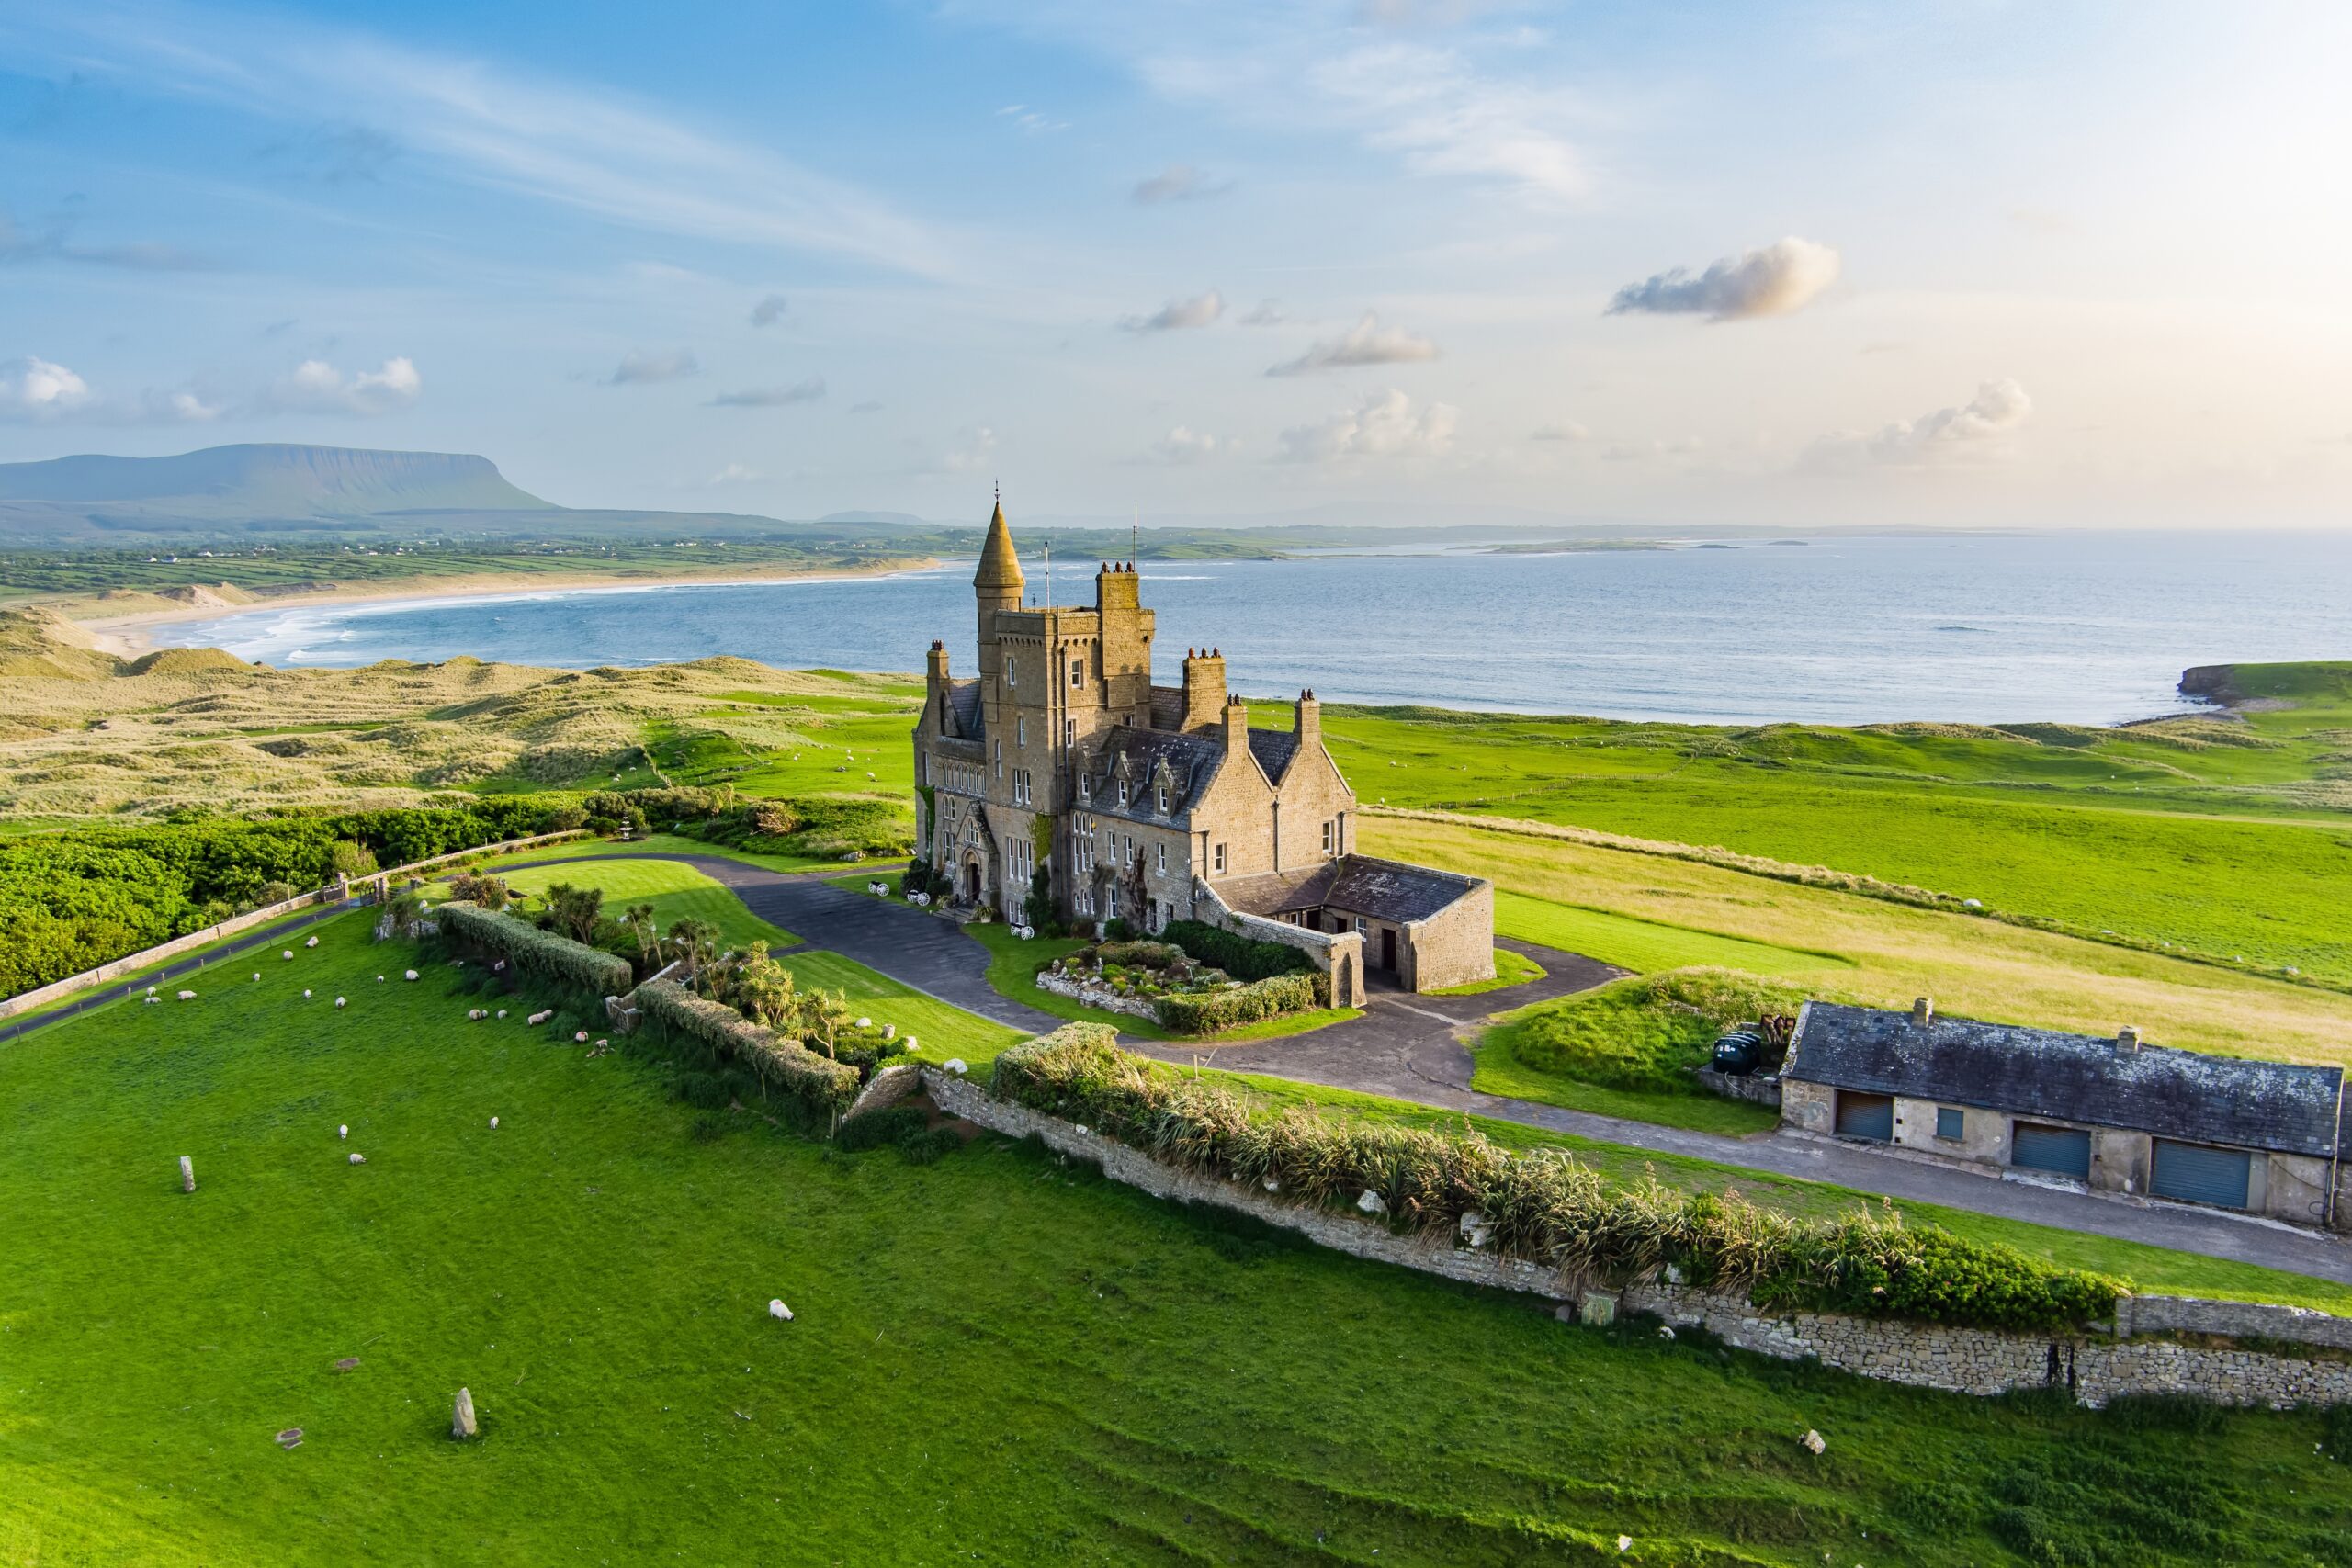 The beautiful seaside and sheep fields surrounding Classiebawn Castle in Ireland 